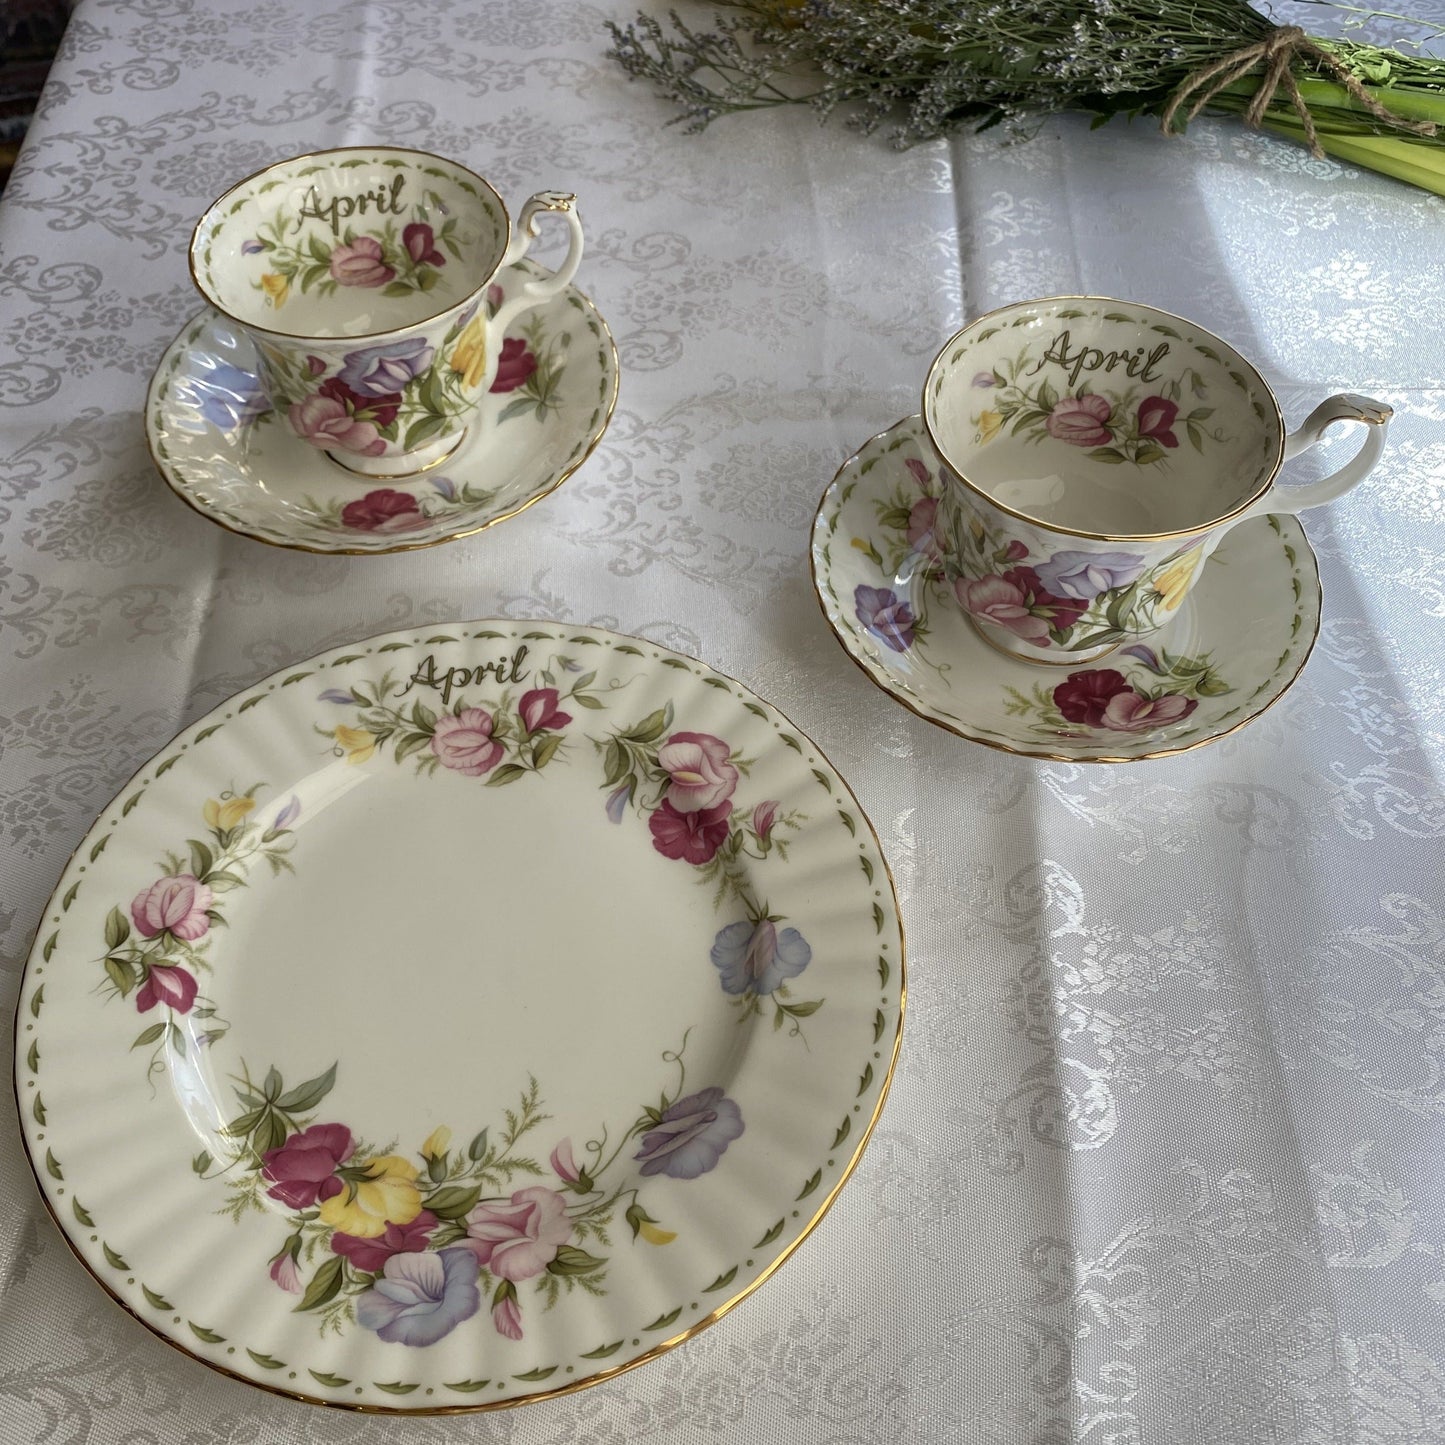 Royal Albert Bone China England Pocelain Teacups, Saucers and Serving Plate